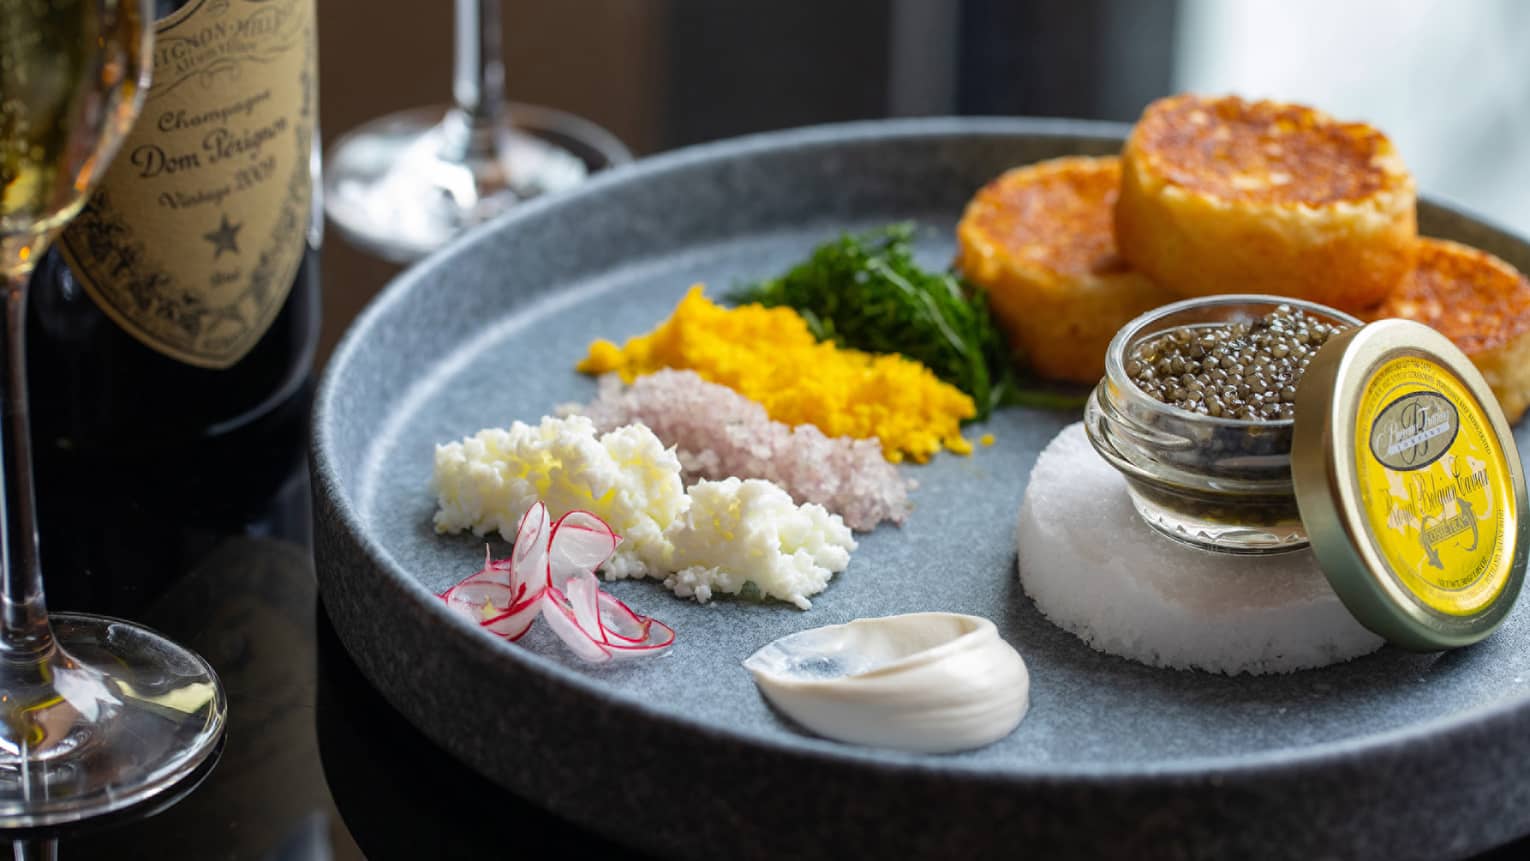 Caviar, seasonings, herbs, and potatoes on a grey plate.